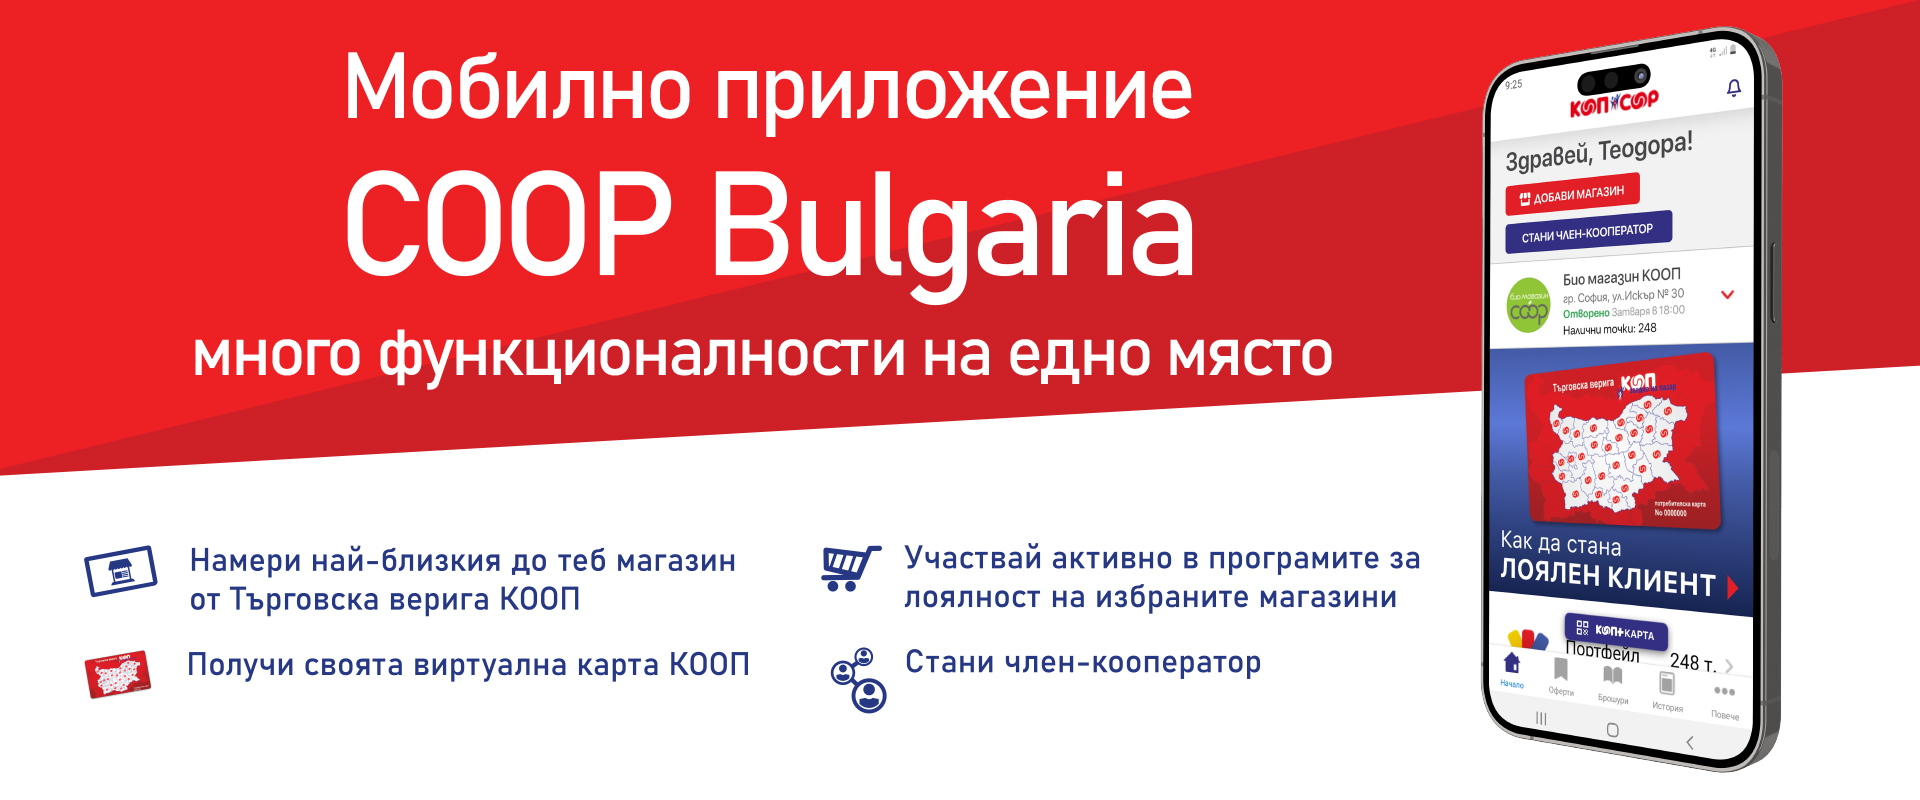 Мобилно приложение COOP Bulgaria